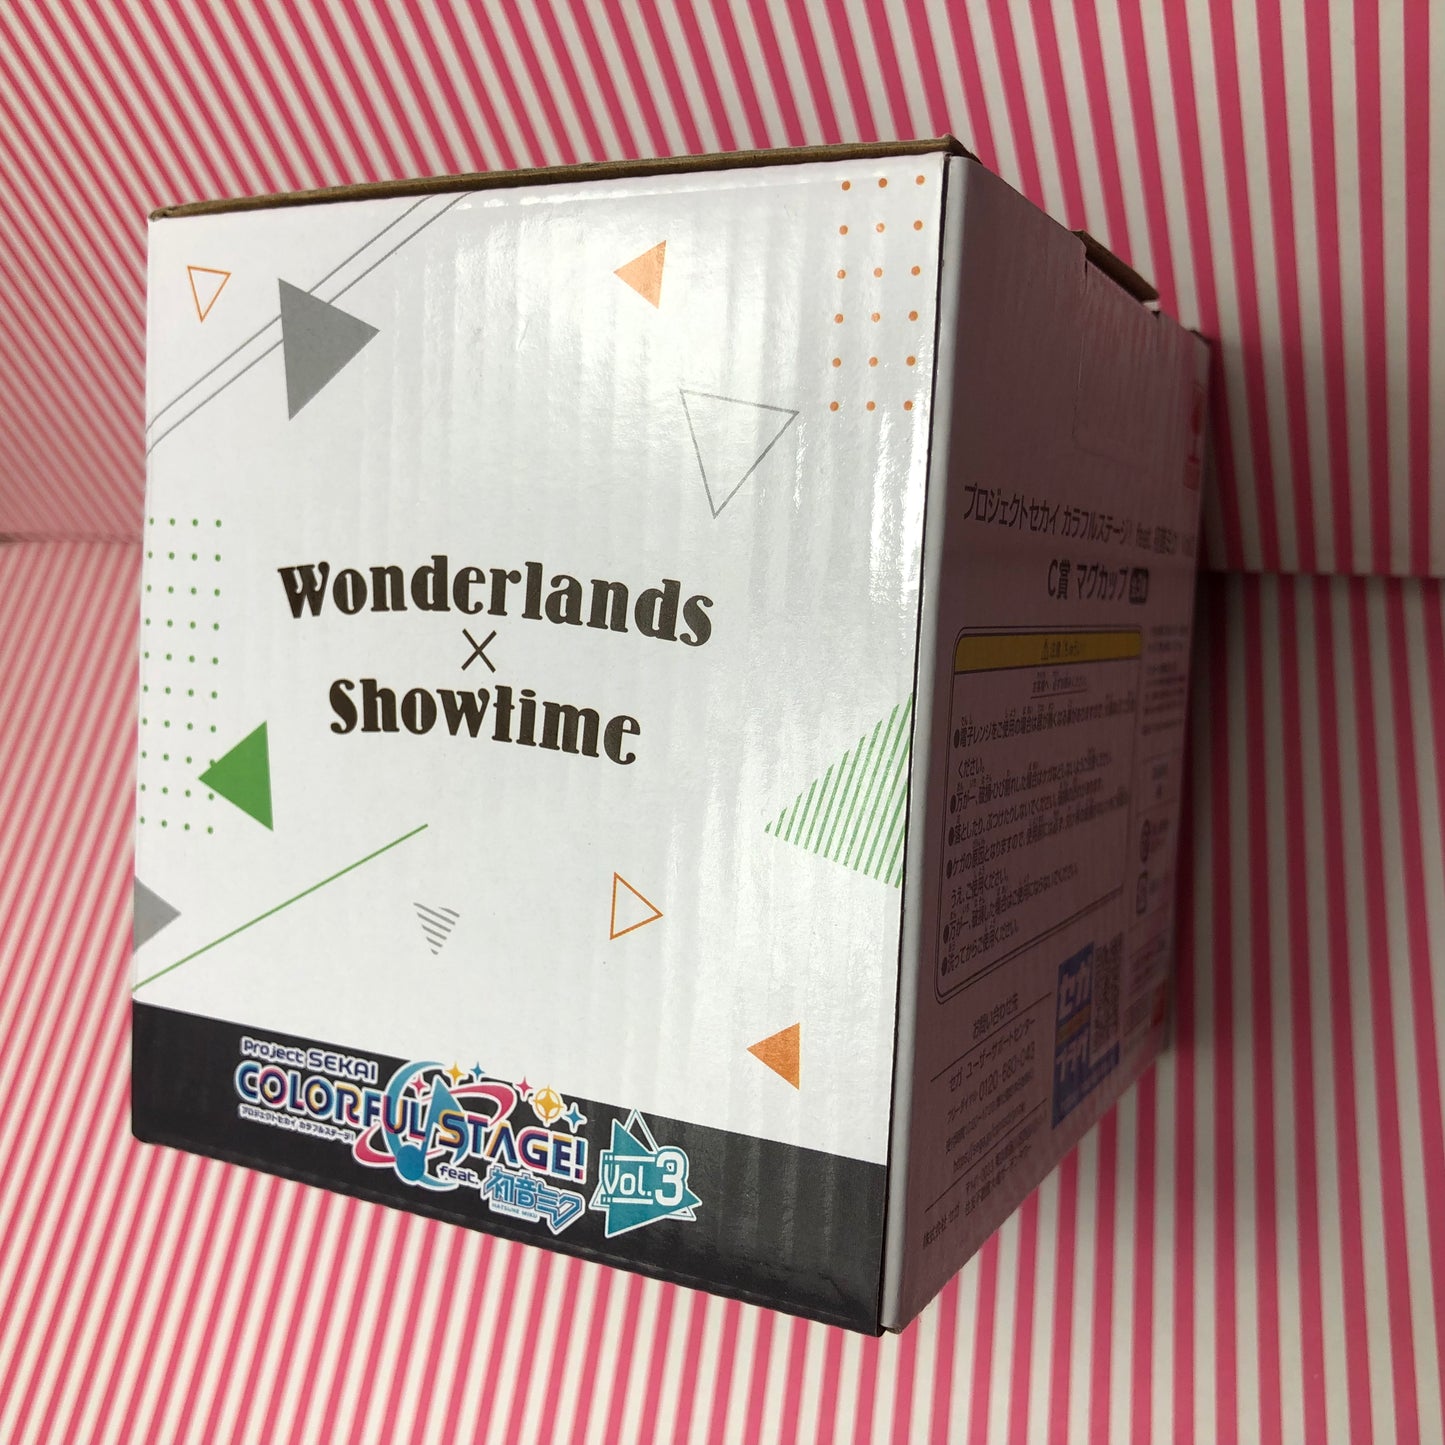 Mug C Vol.3 Wonderlands x Showtime Project Sekai Colorful Stage!